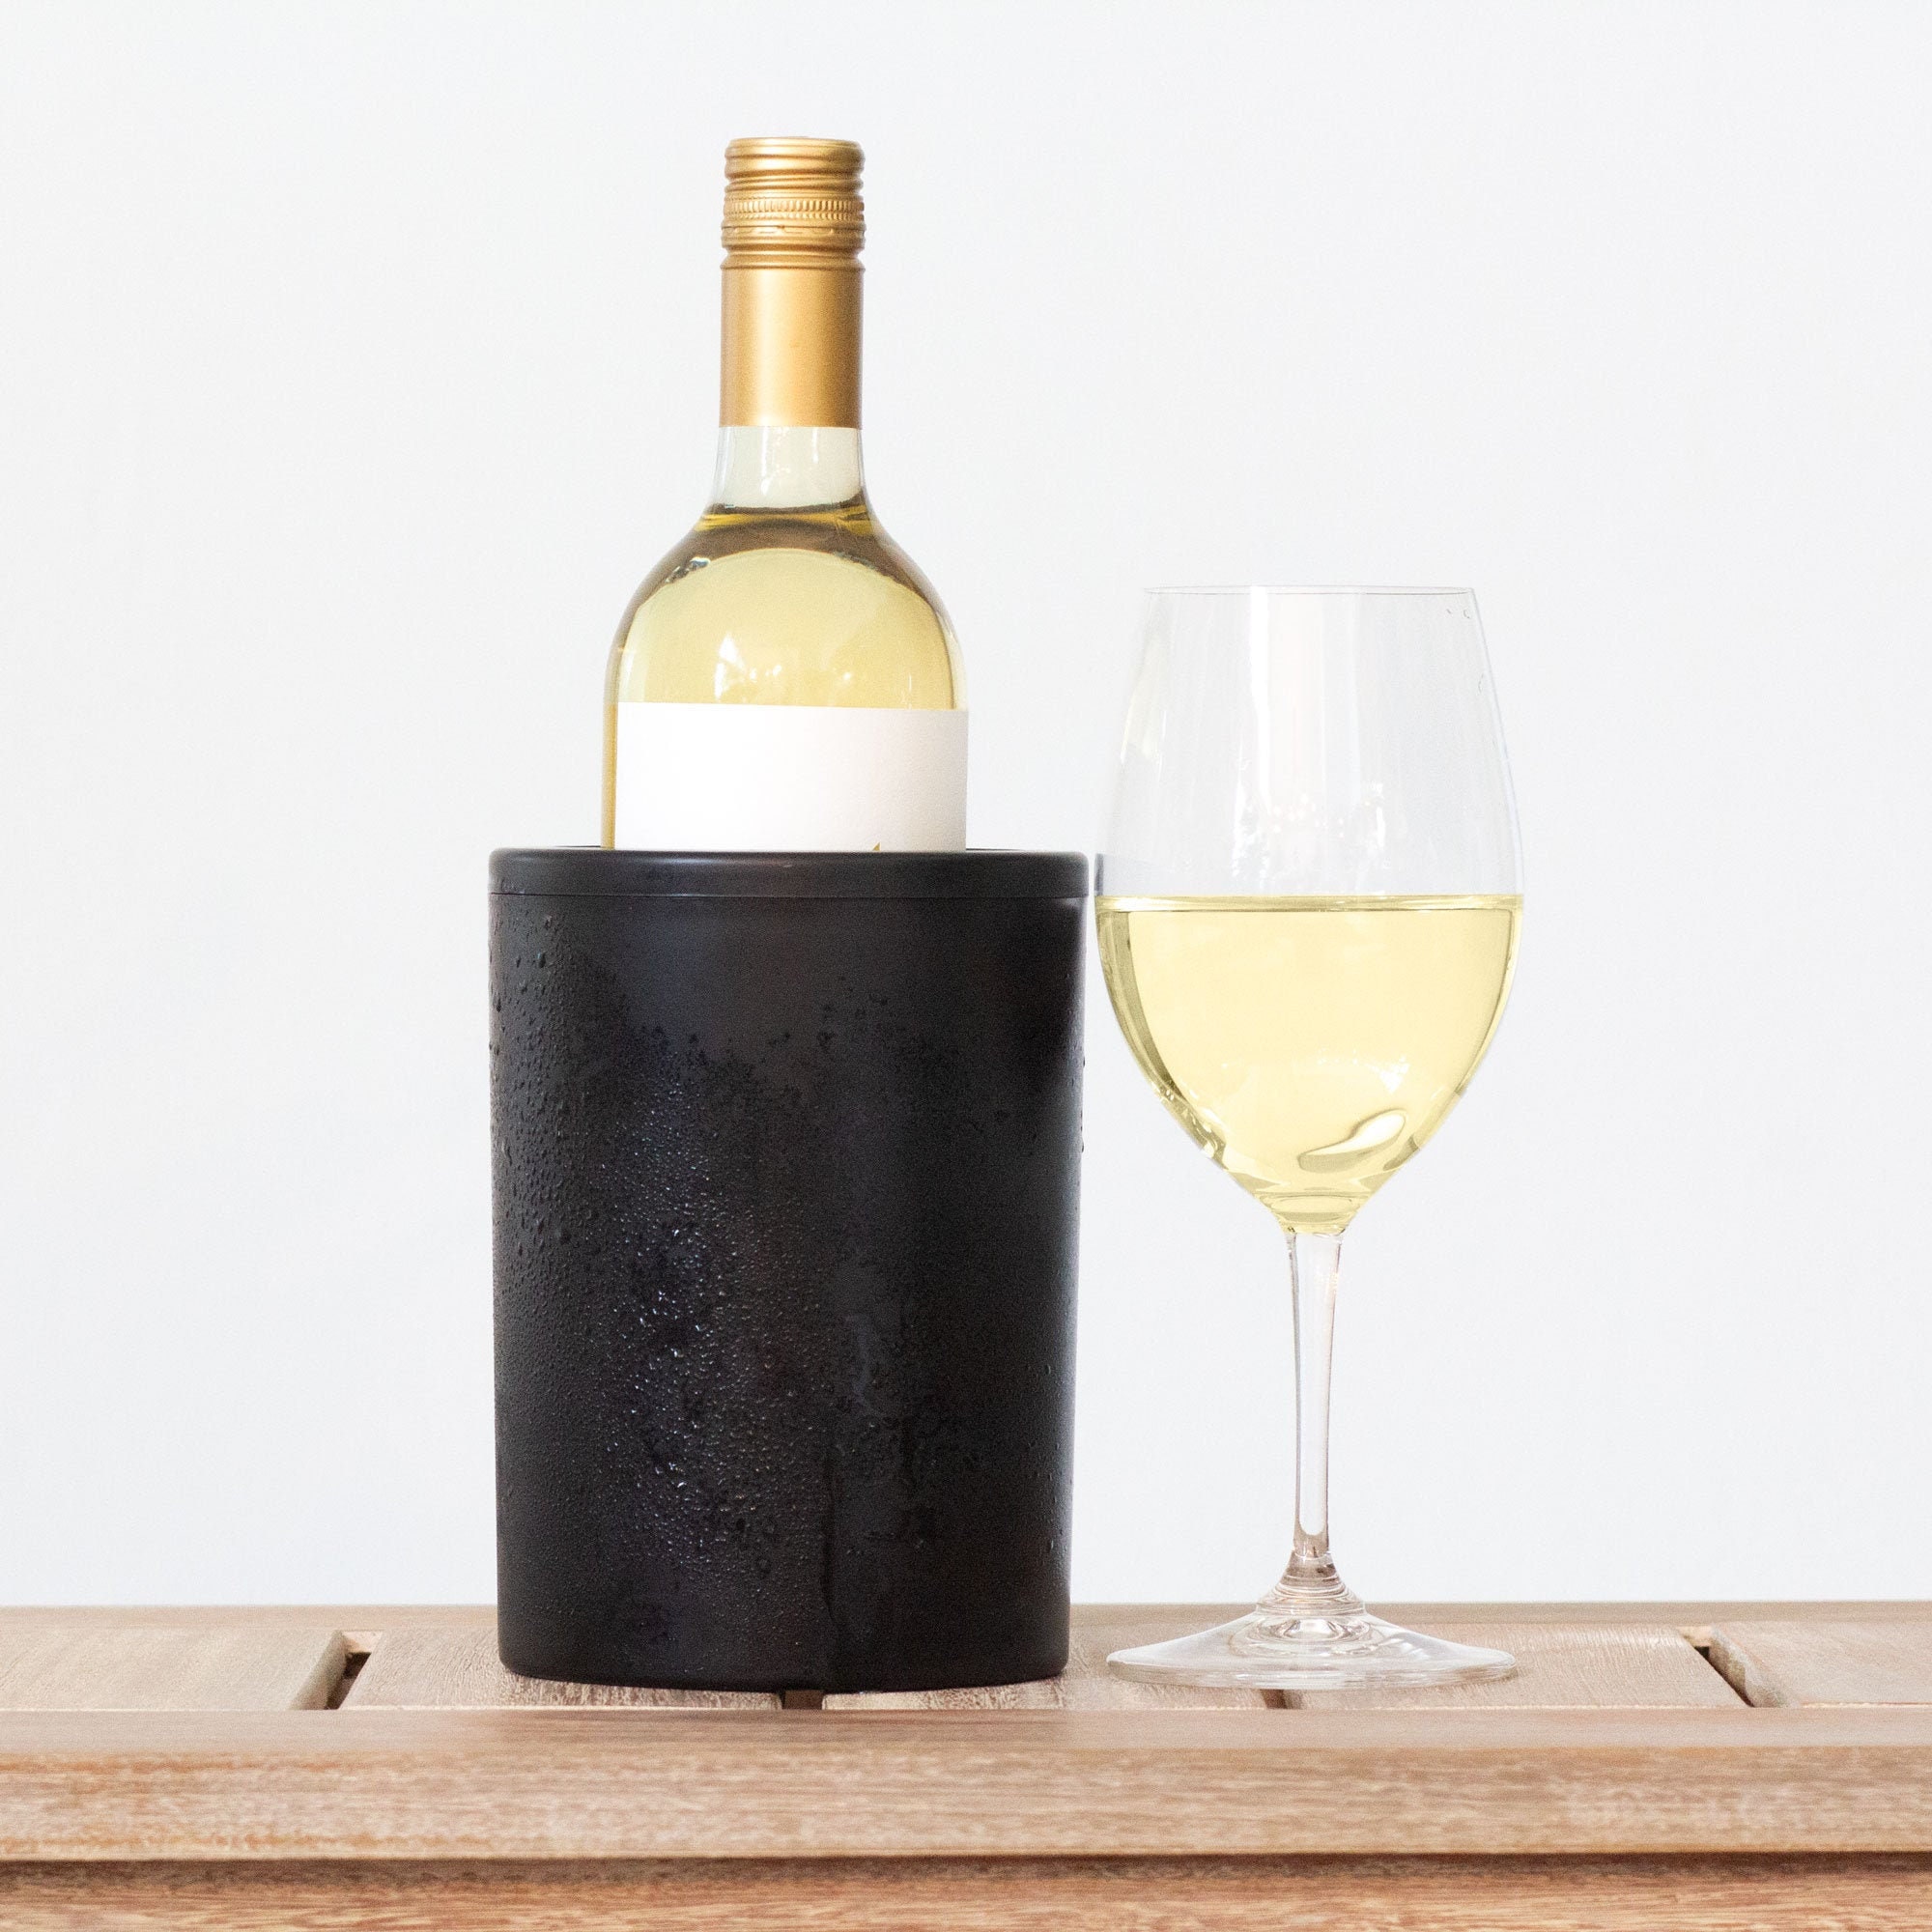 Caddyo Elegant Cloth Wine Tote & Iceless Wine Chiller Set 